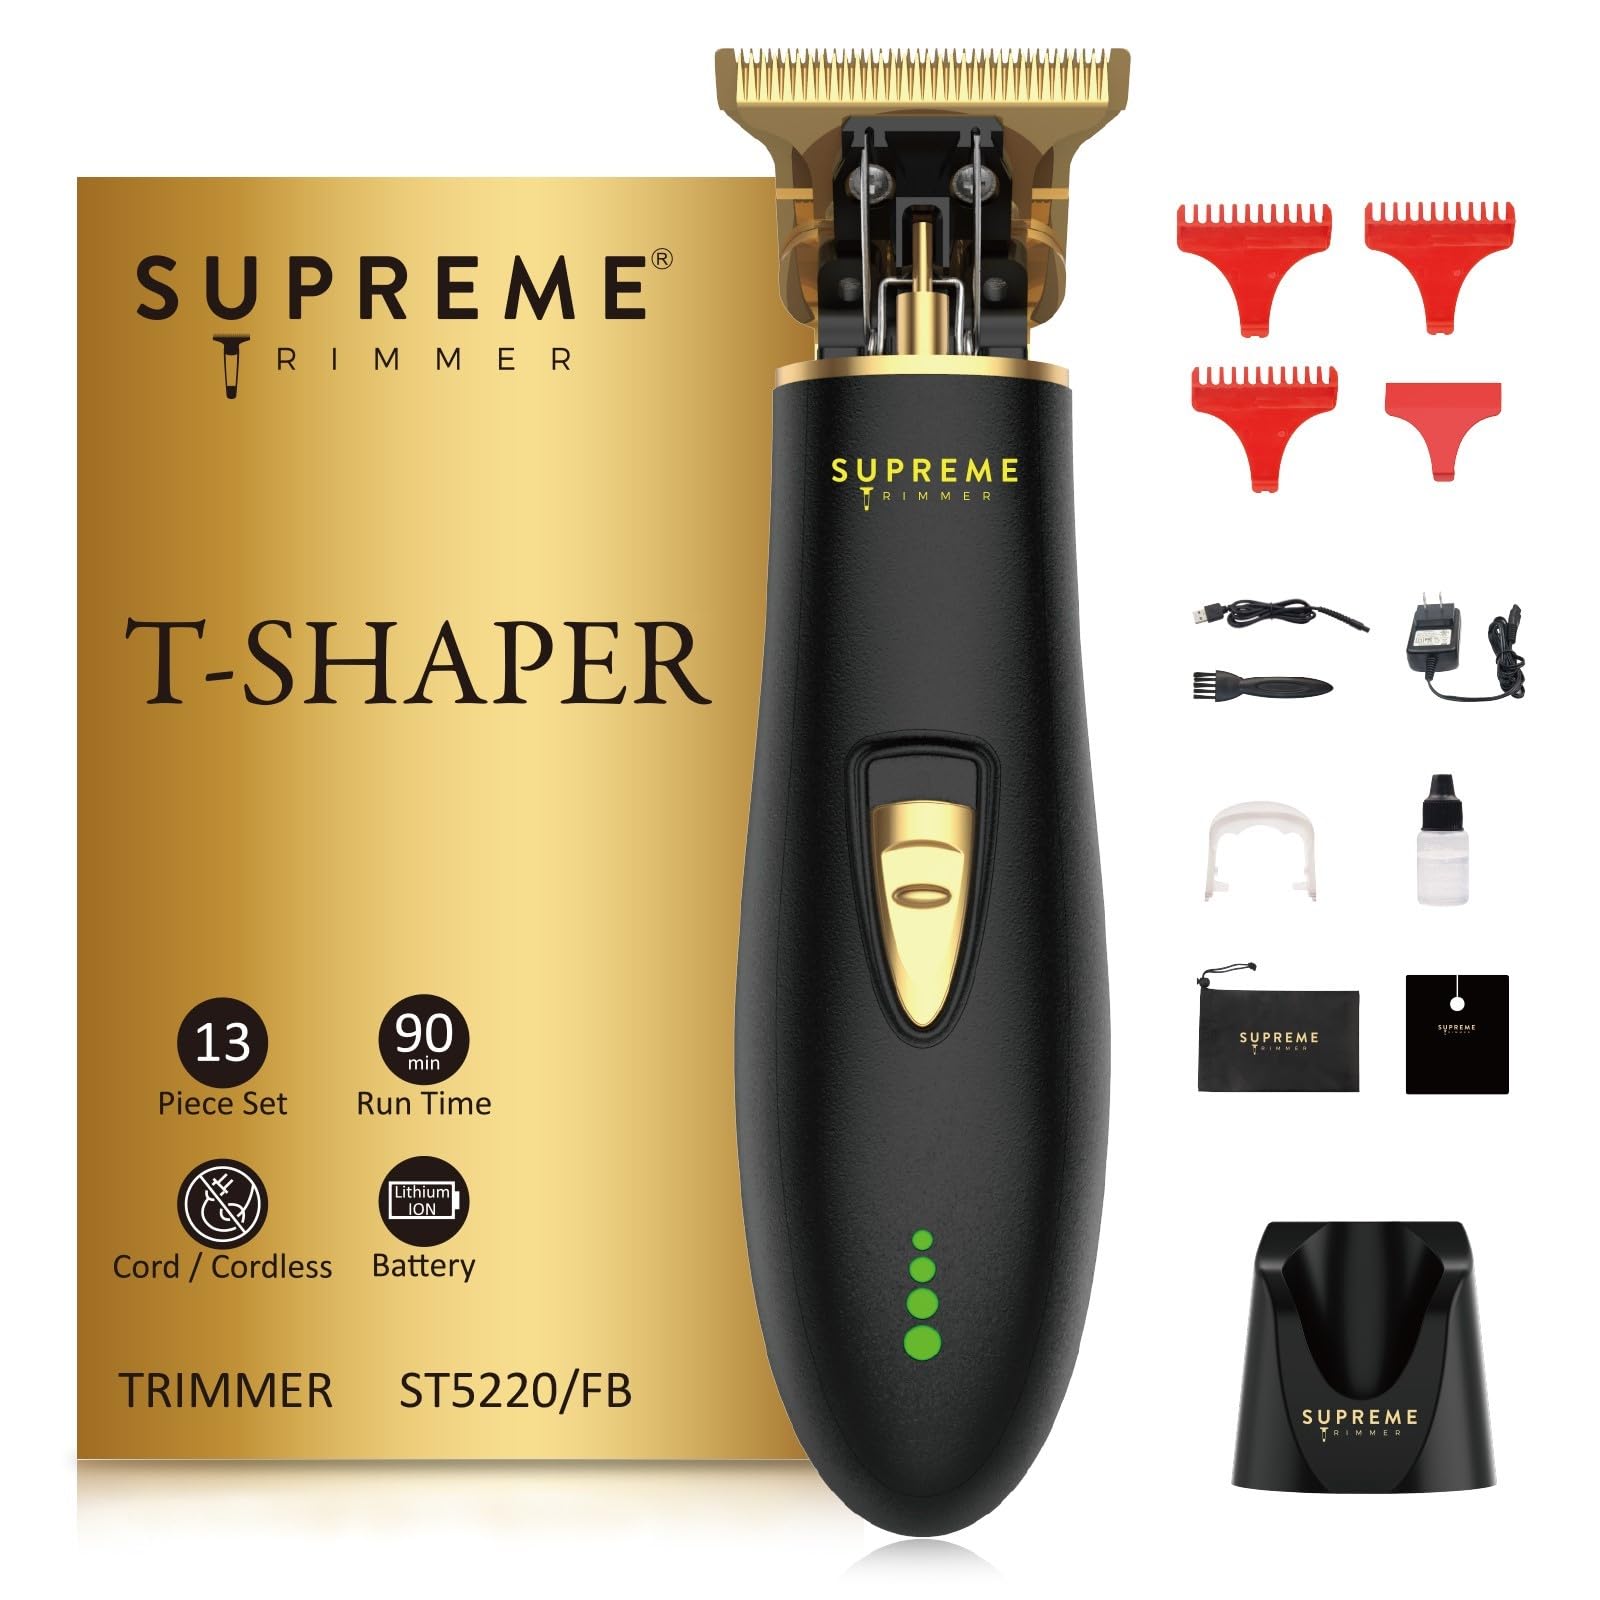 Supreme Trimmer Hair Trimmer ST5220 Beard Trimmer for Men Professional Barber Liner Cordless Hair Clippers - Black T-Shaper